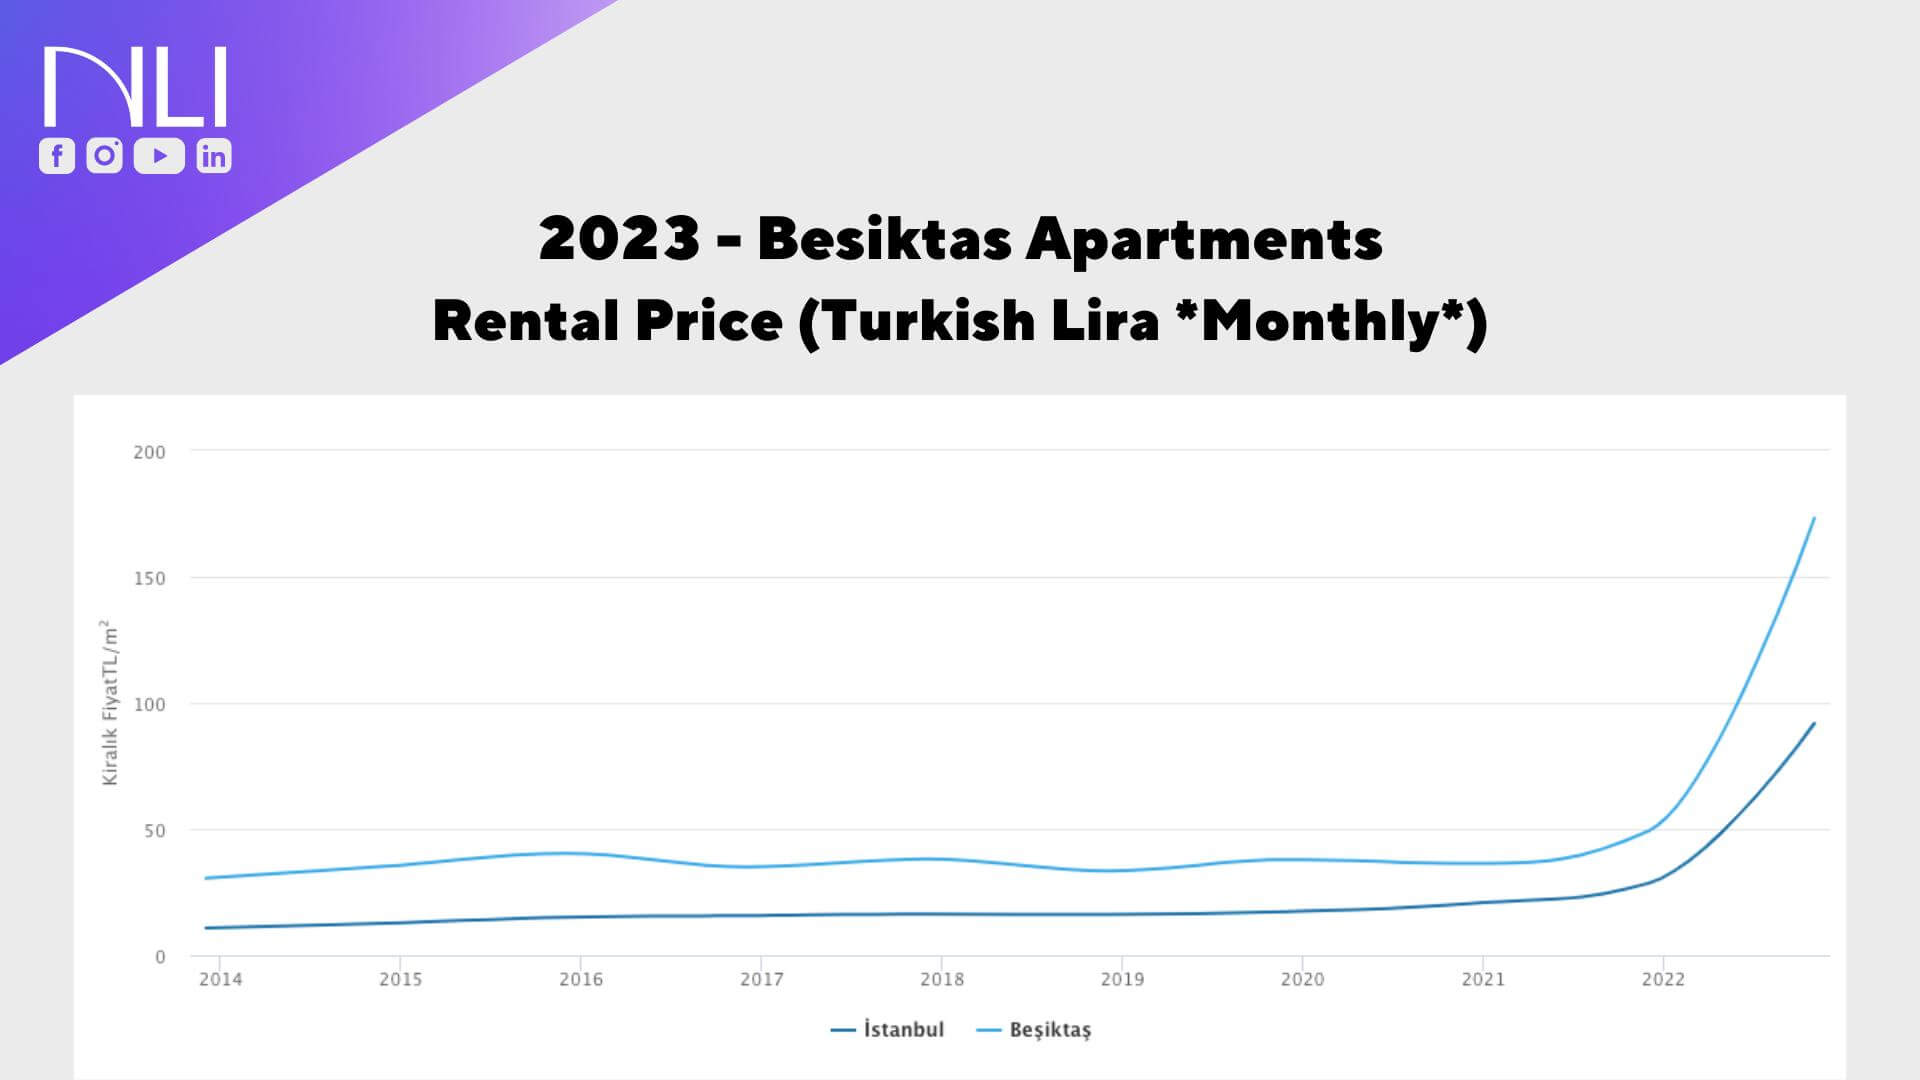 Besiktas Apartments Rental Prices